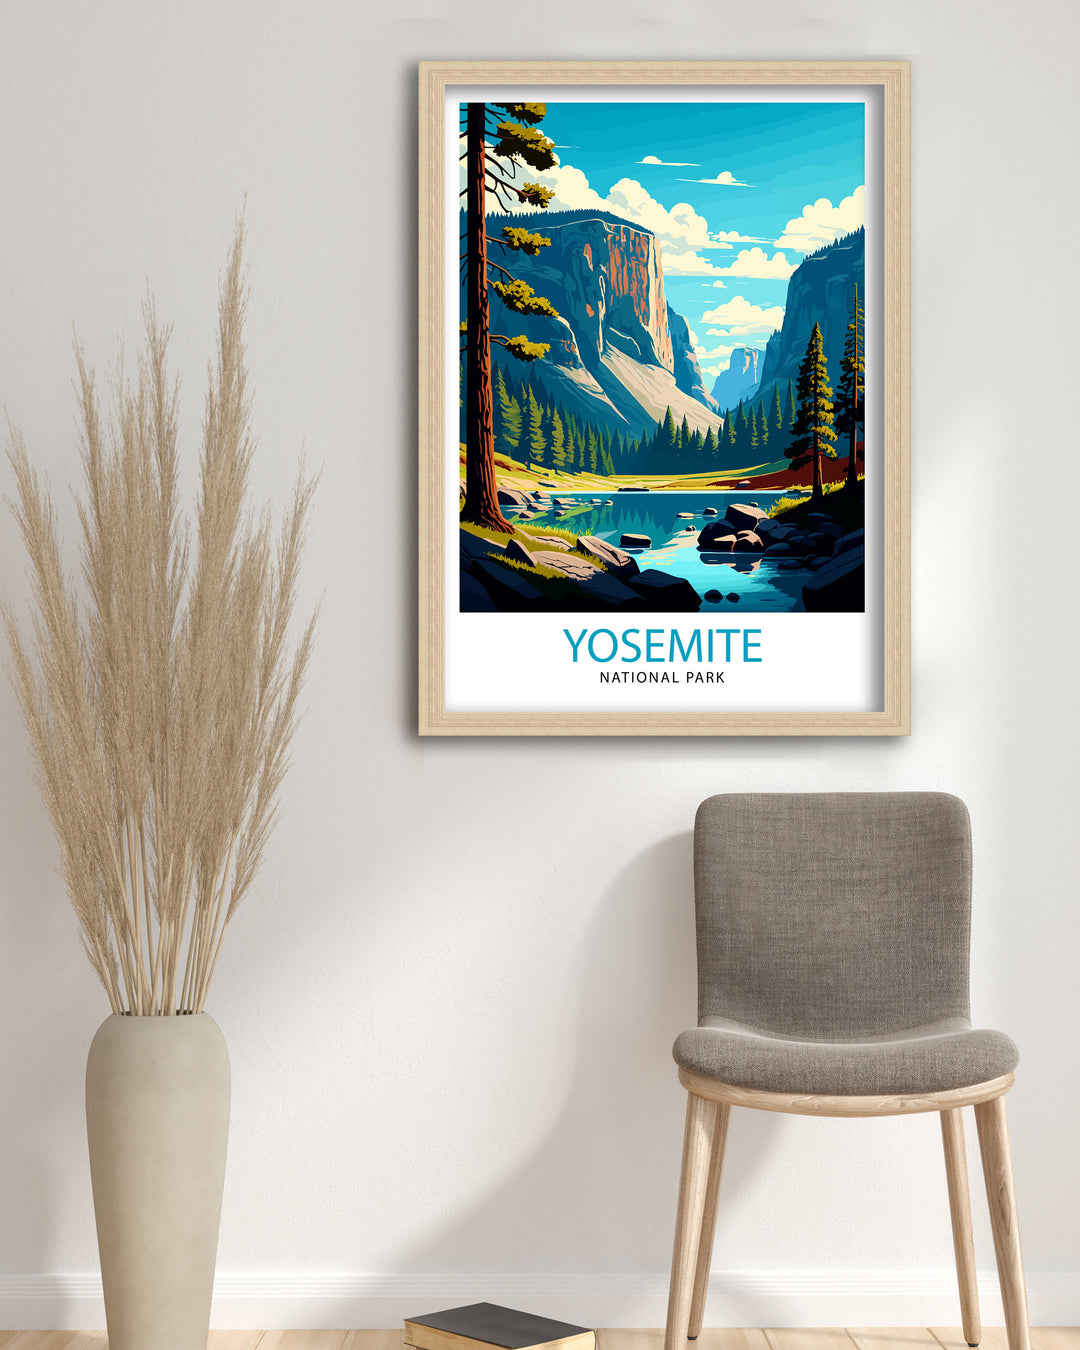 Yosemite National Park Travel Poster Yosemite Wall Art Yosemite Home Living Decor Yosemite Illustration Travel Poster Gift for Yosemite Fans